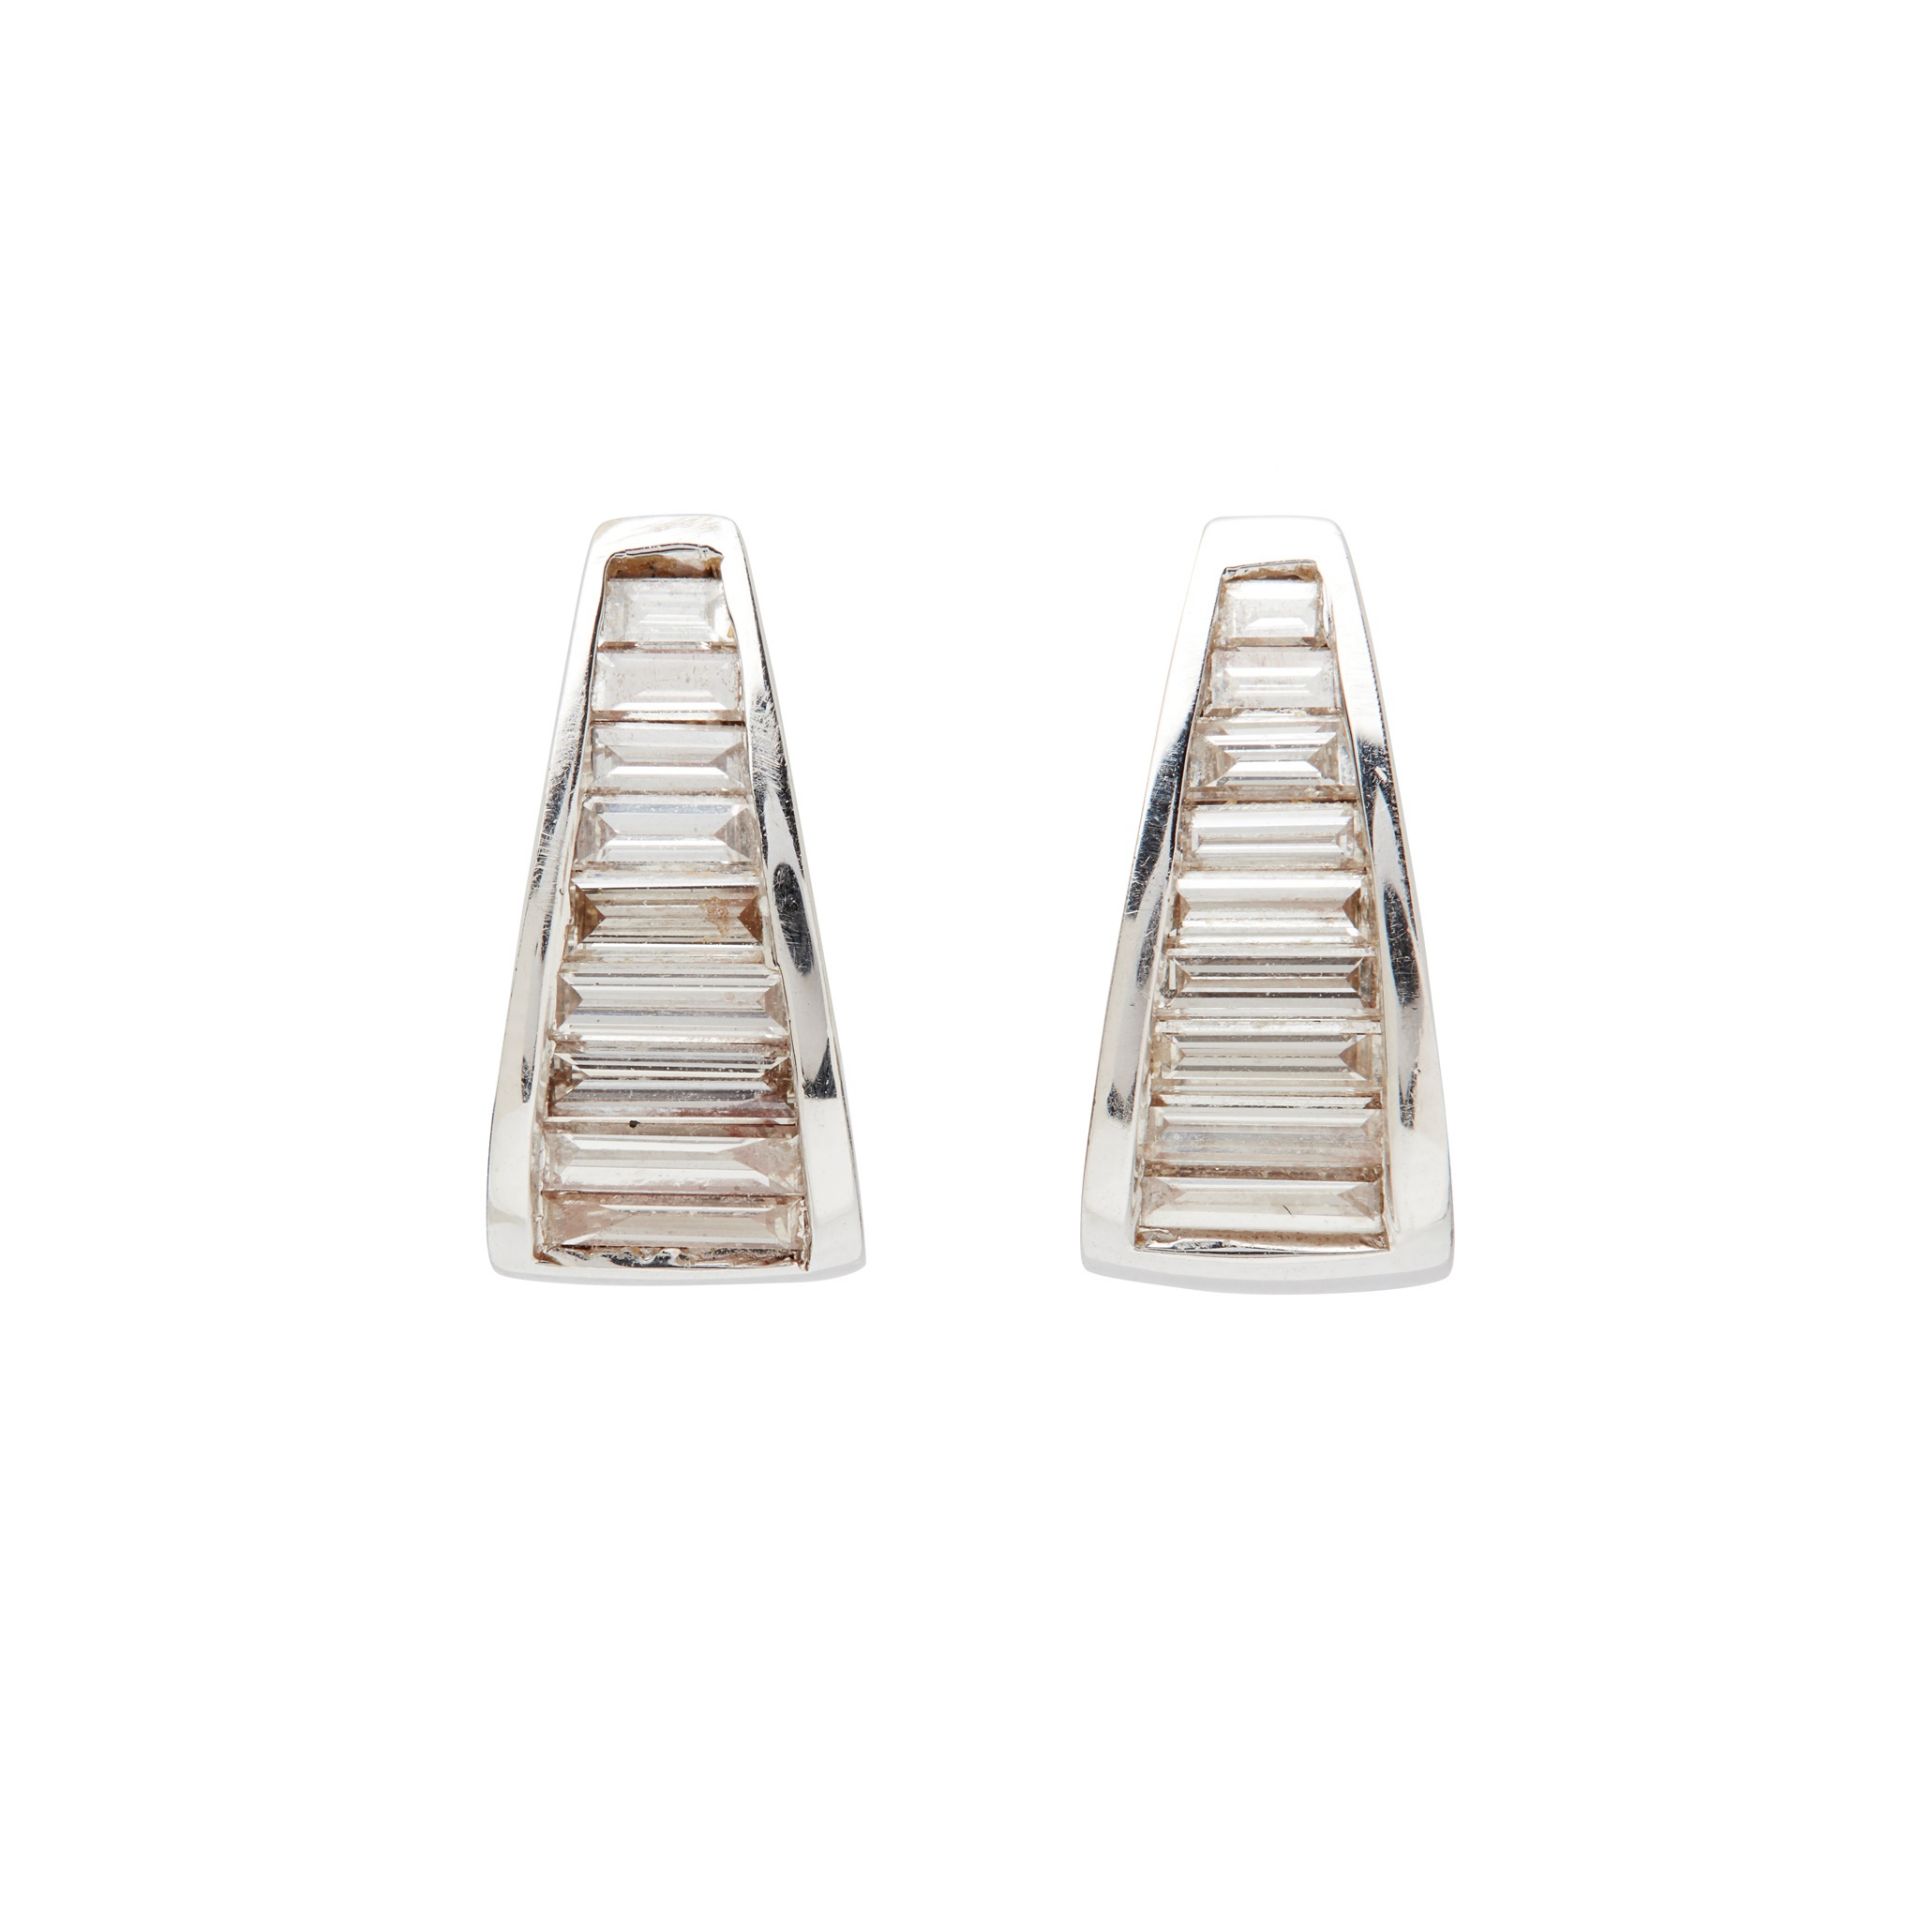 Two pairs of diamond set earrings - Image 3 of 3